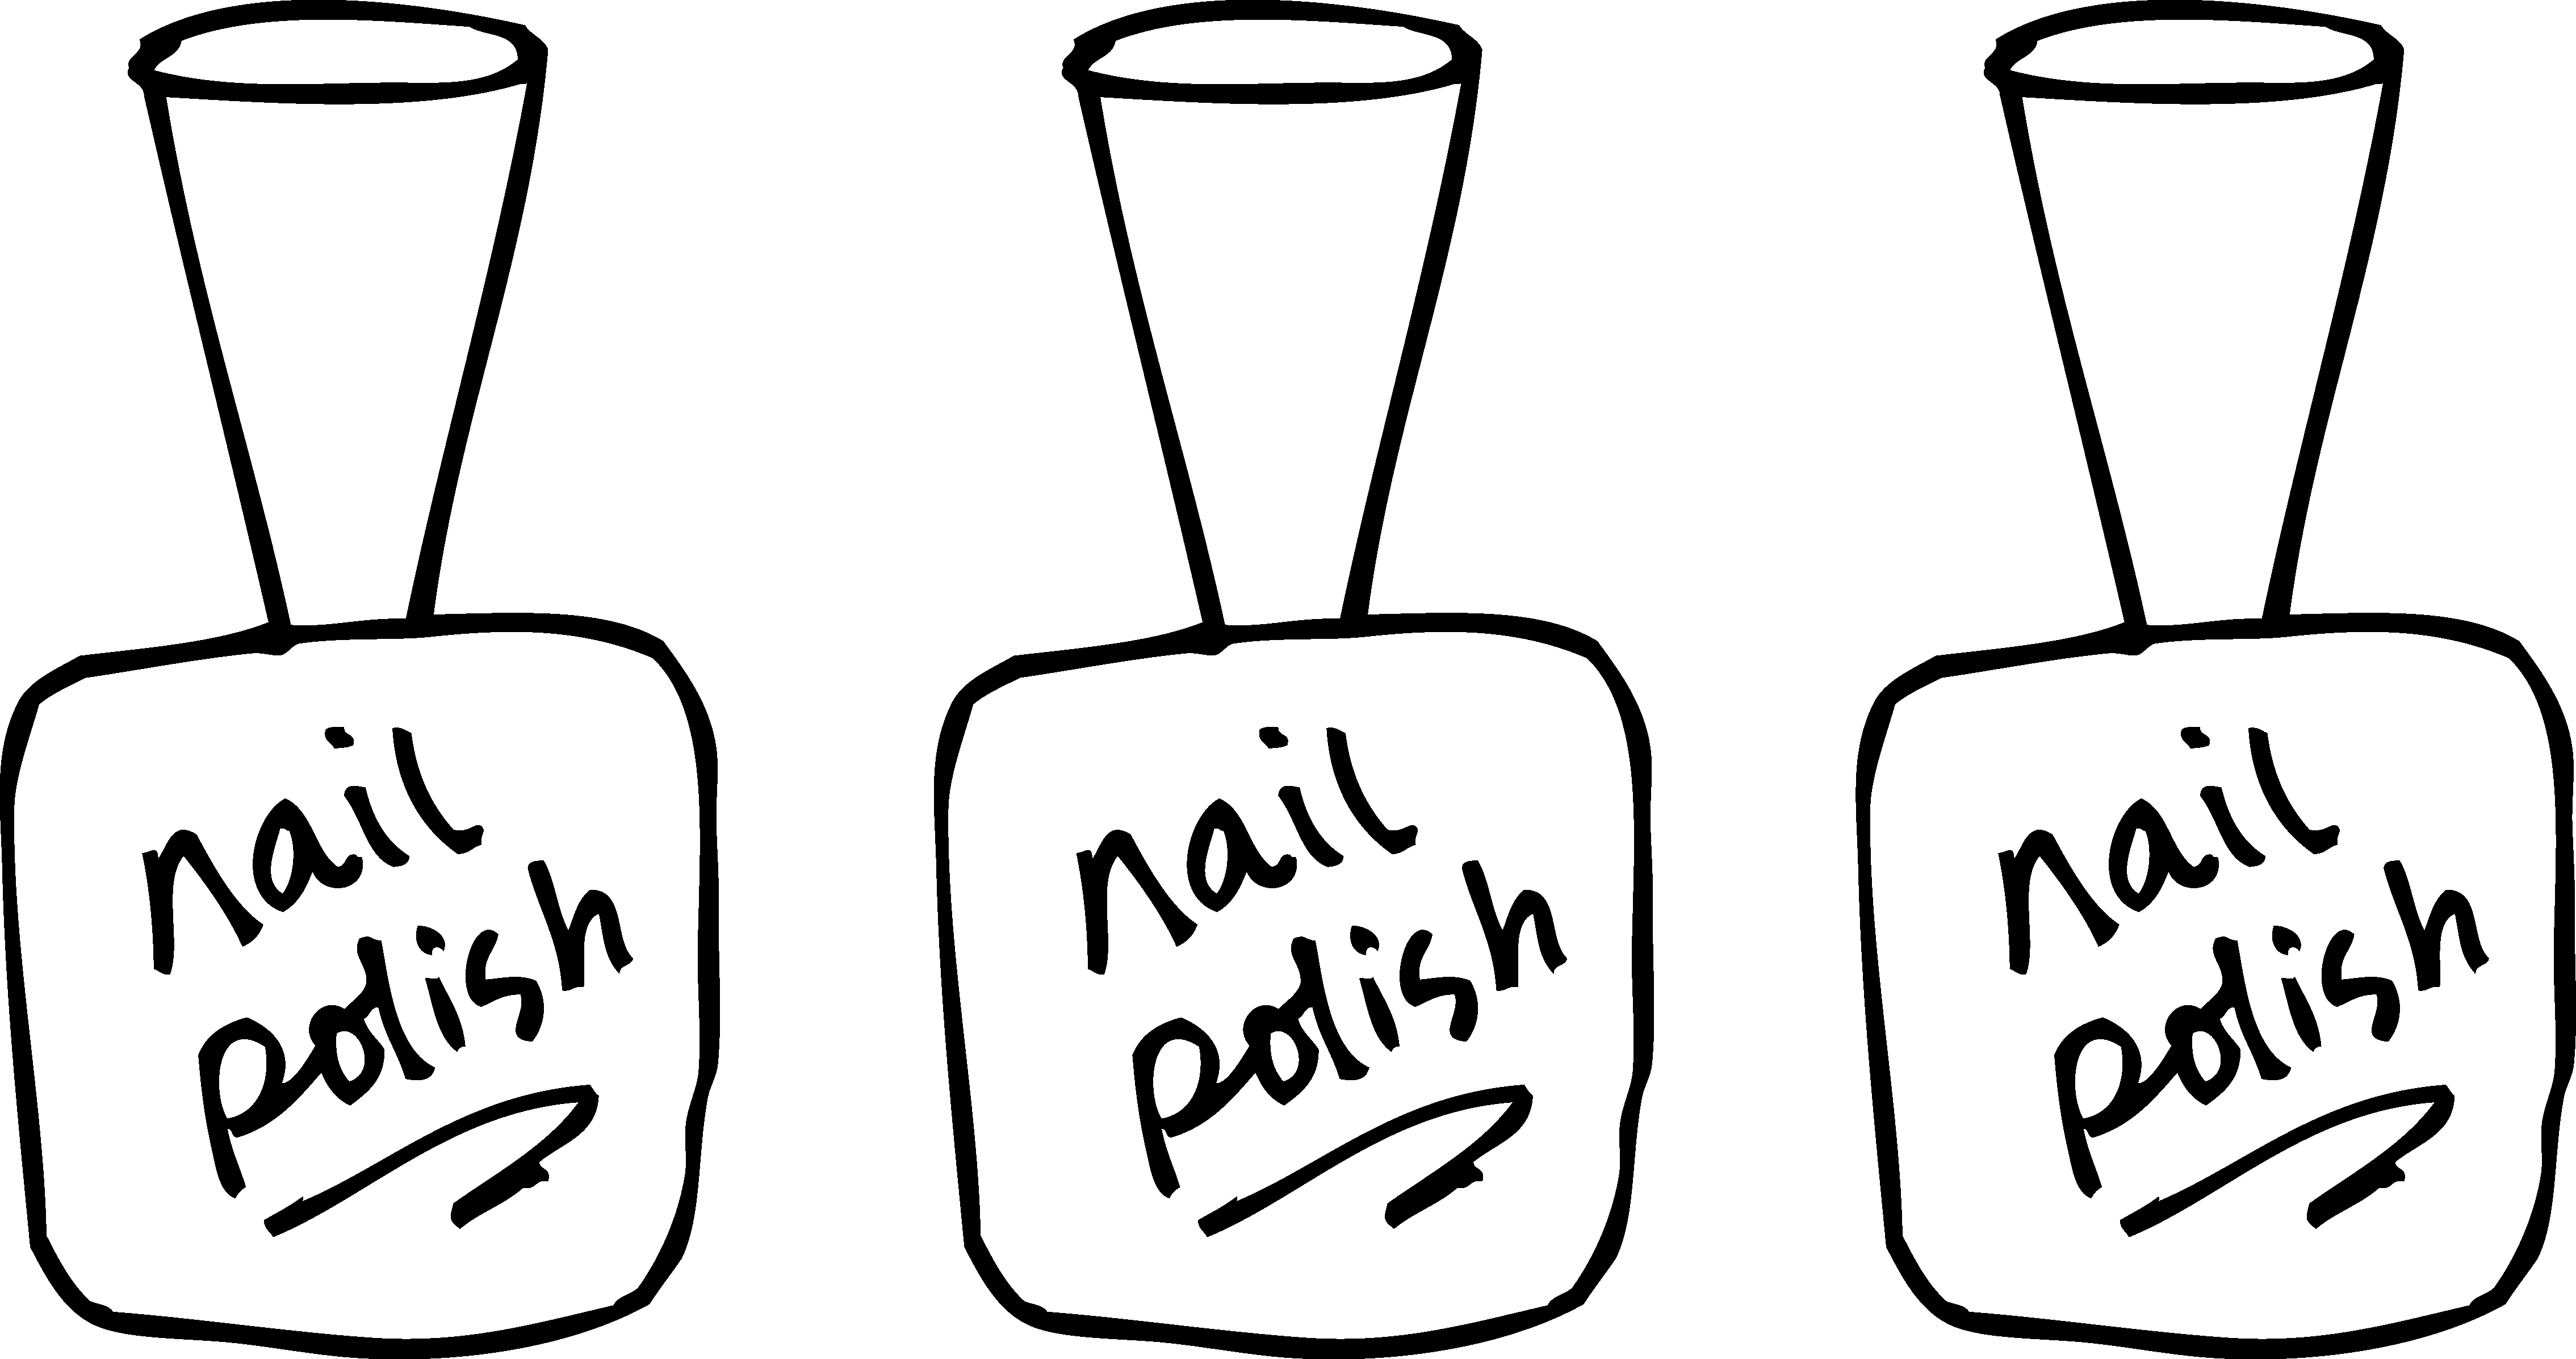 9. Nail polish clip art borders - wide 3